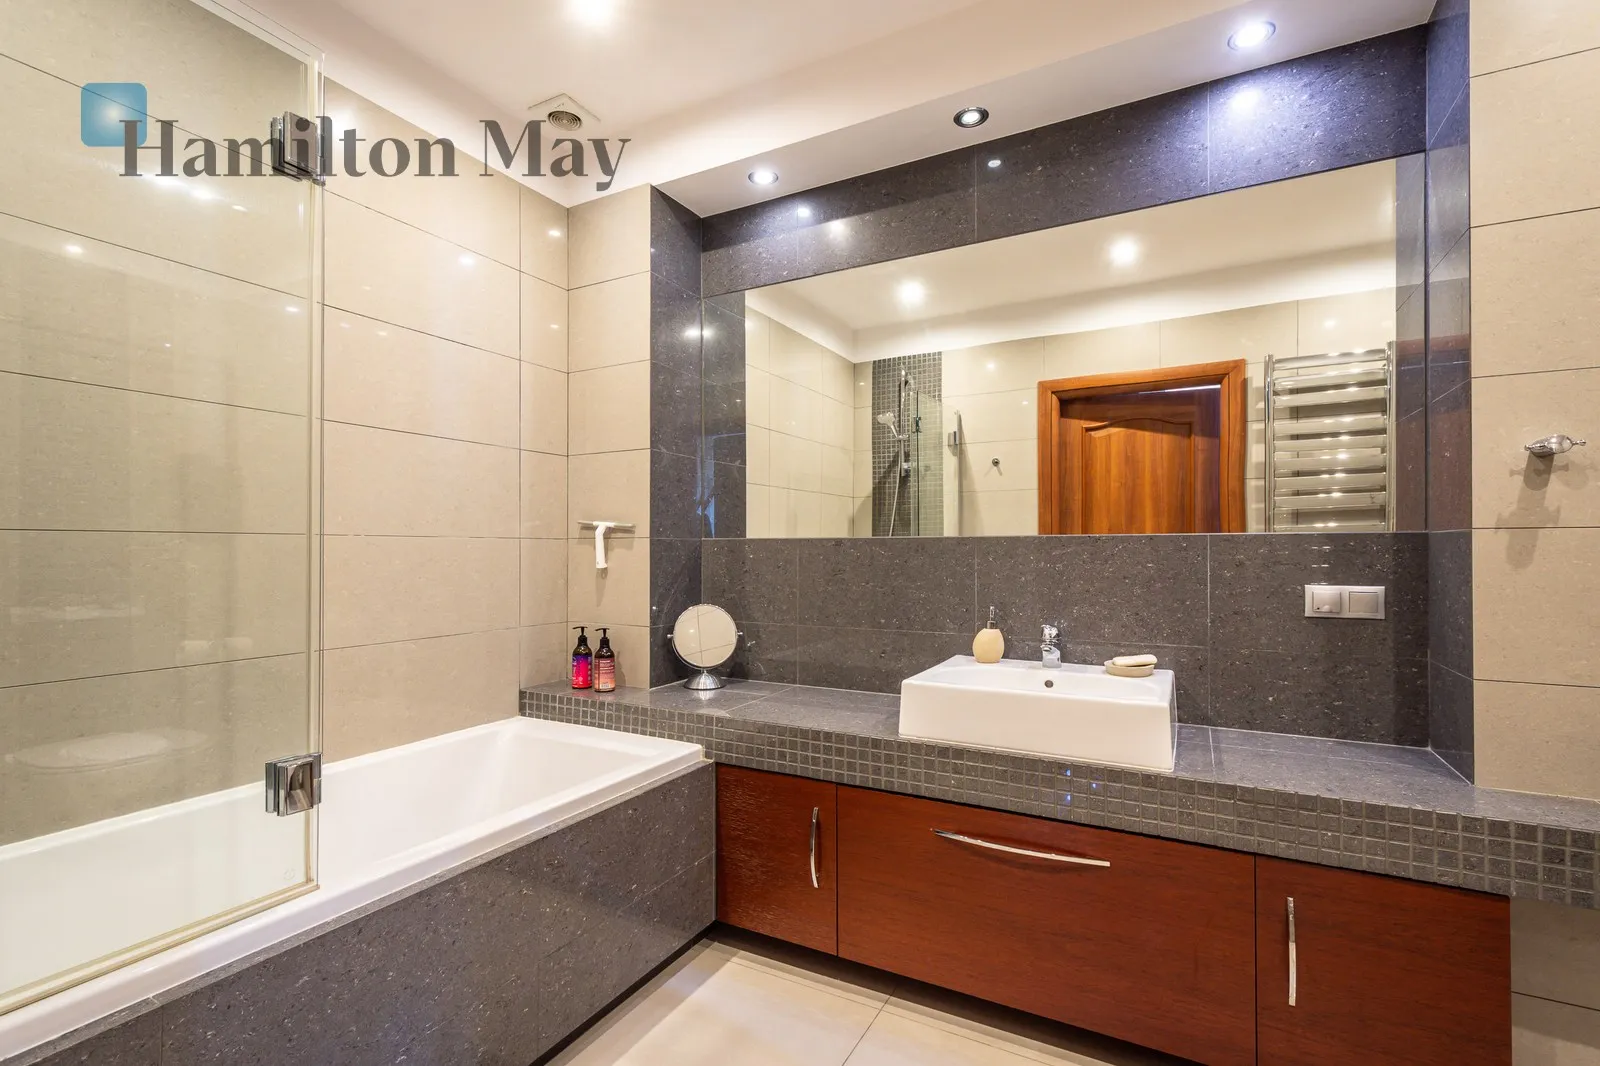 Level: 2 Price: 1350000 PLN Bedrooms: 2 Bathrooms: 1 Size: 73.84m2 Price/m2: 18283 PLN